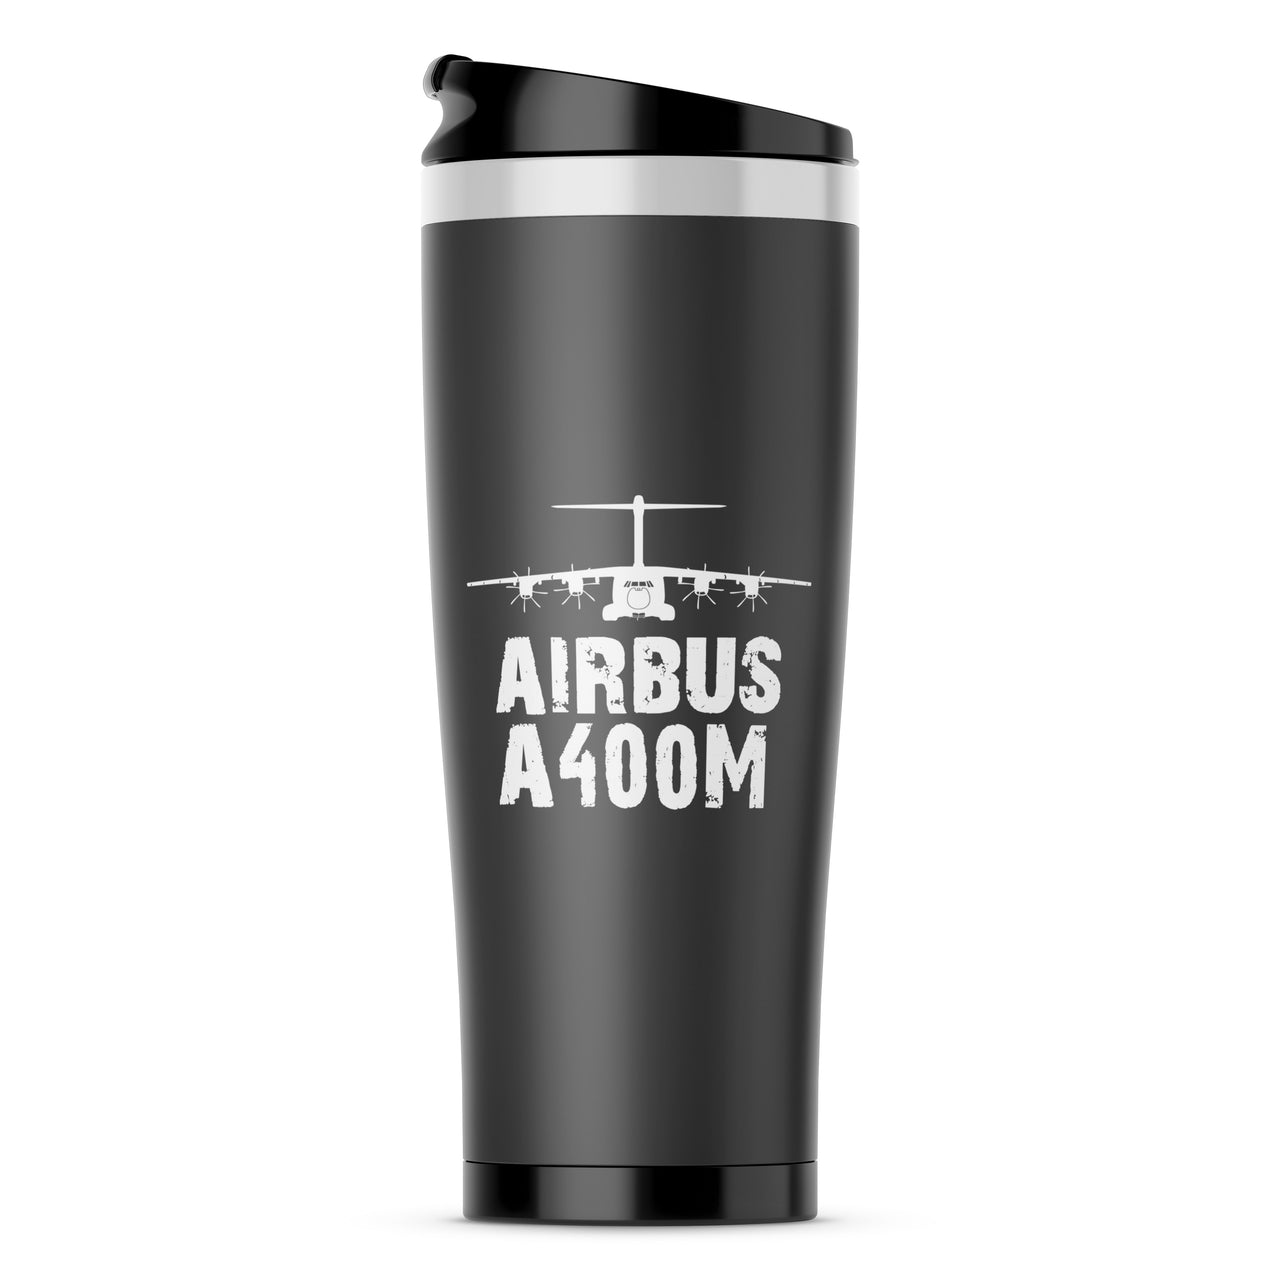 Airbus A400M & Plane Designed Travel Mugs